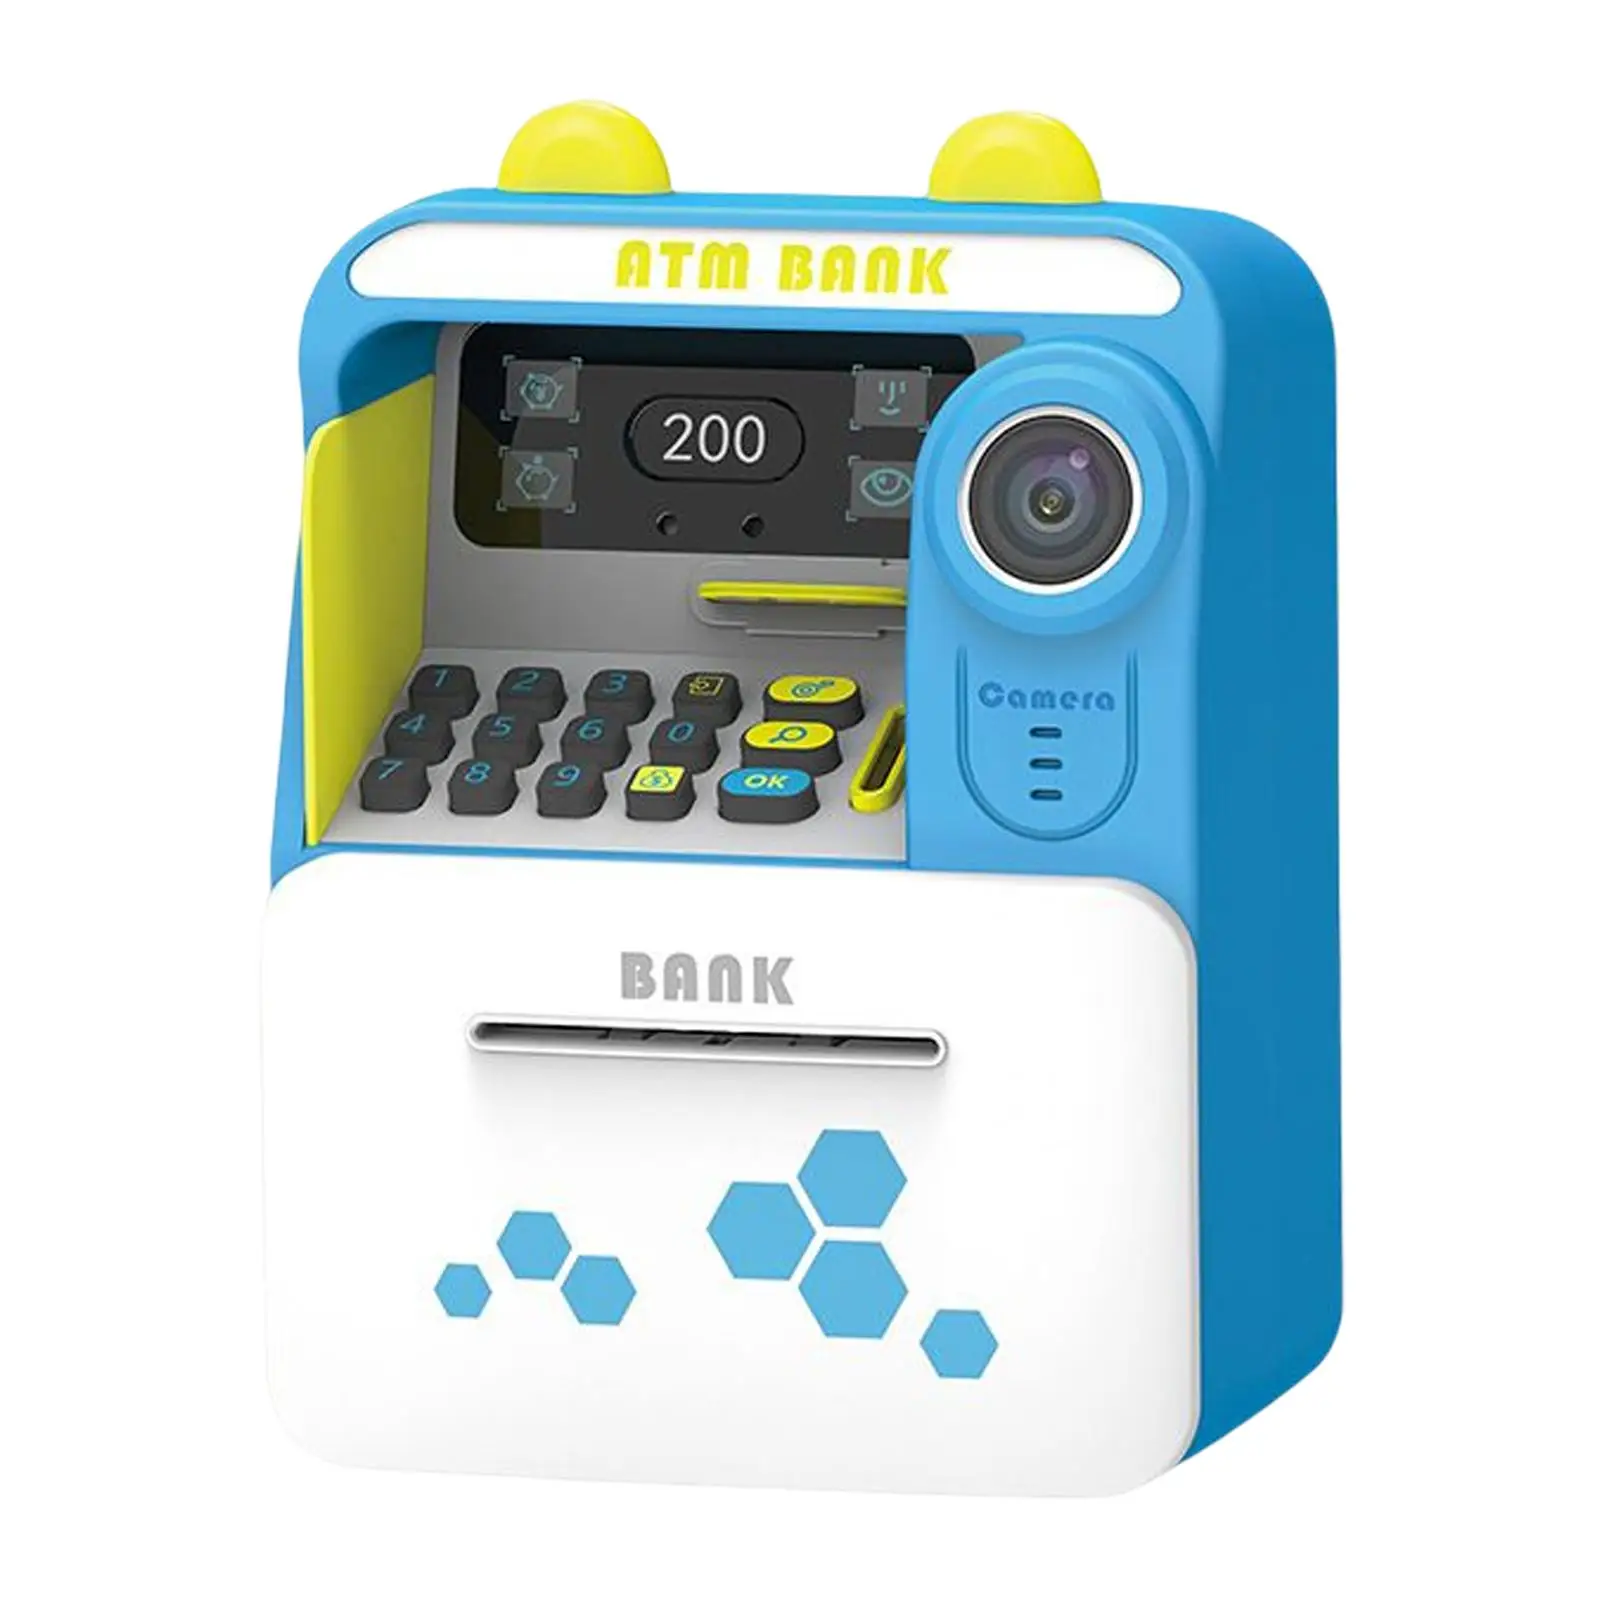 Kids Piggy bank Cash Register Toys small atm Machine Saving Box money Bank Electronic Money bank Girls